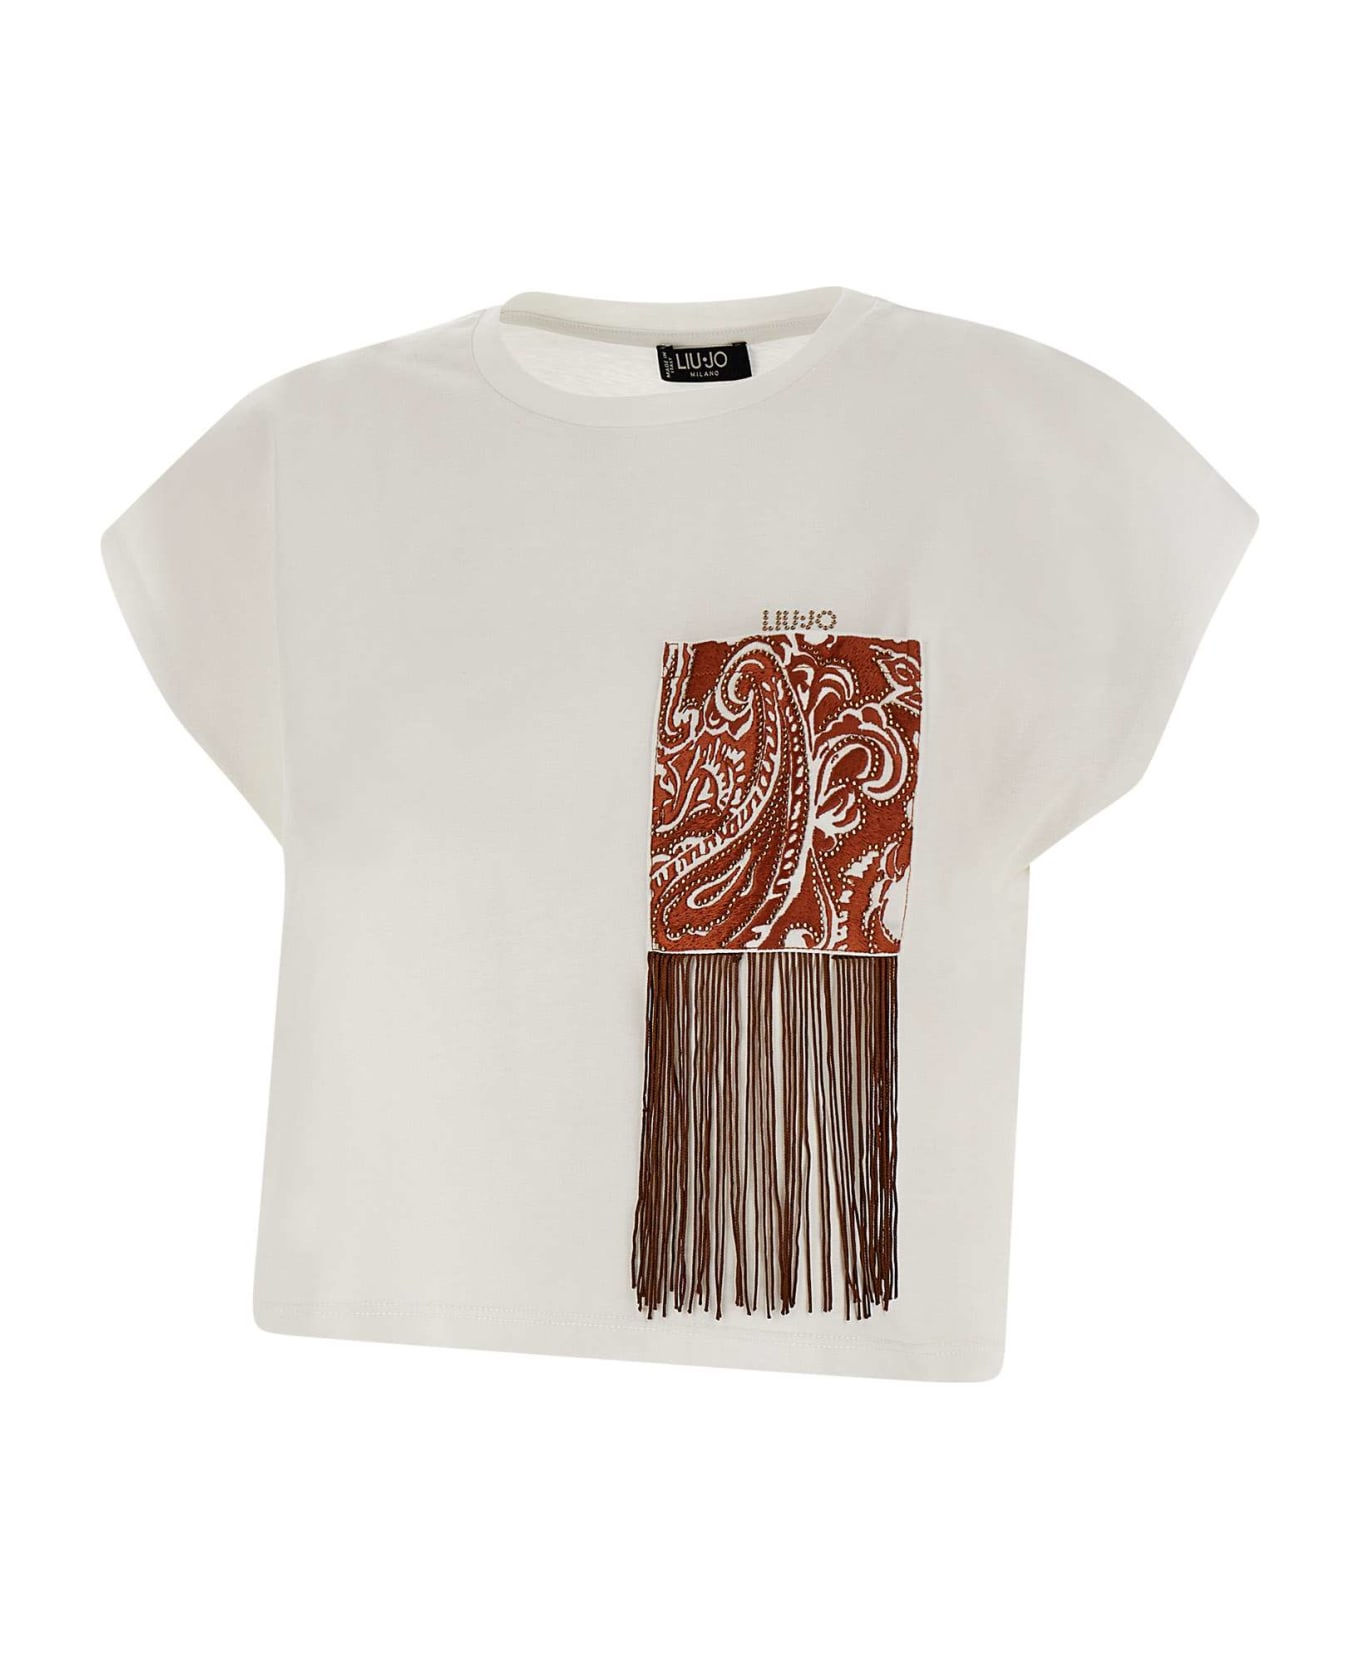 Liu-Jo "moda" Stretch Cotton Jersey T-shirt - WHITE